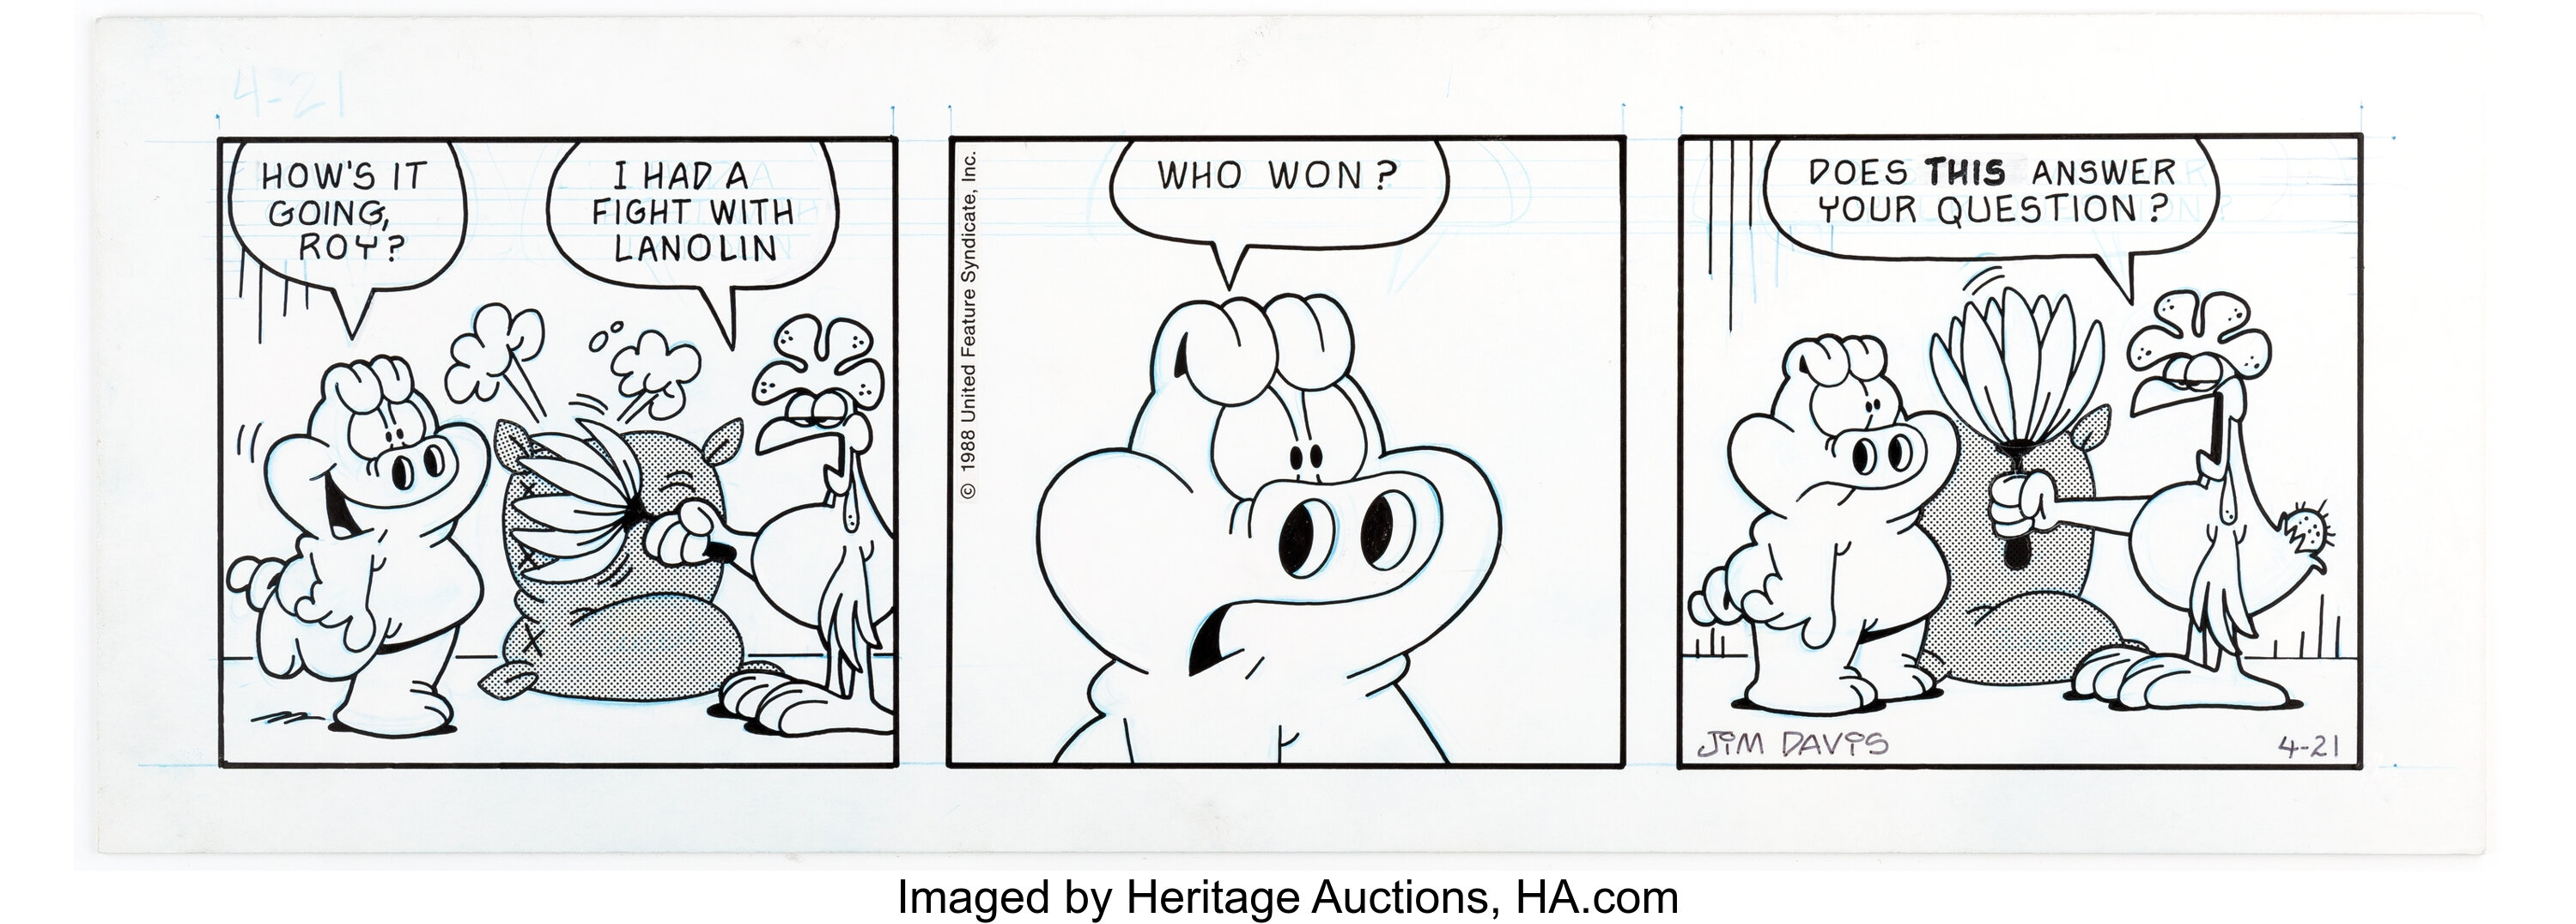 Jim Davis Us Acres Daily Comic Strip Original Art Dated 4 21 Lot Heritage Auctions